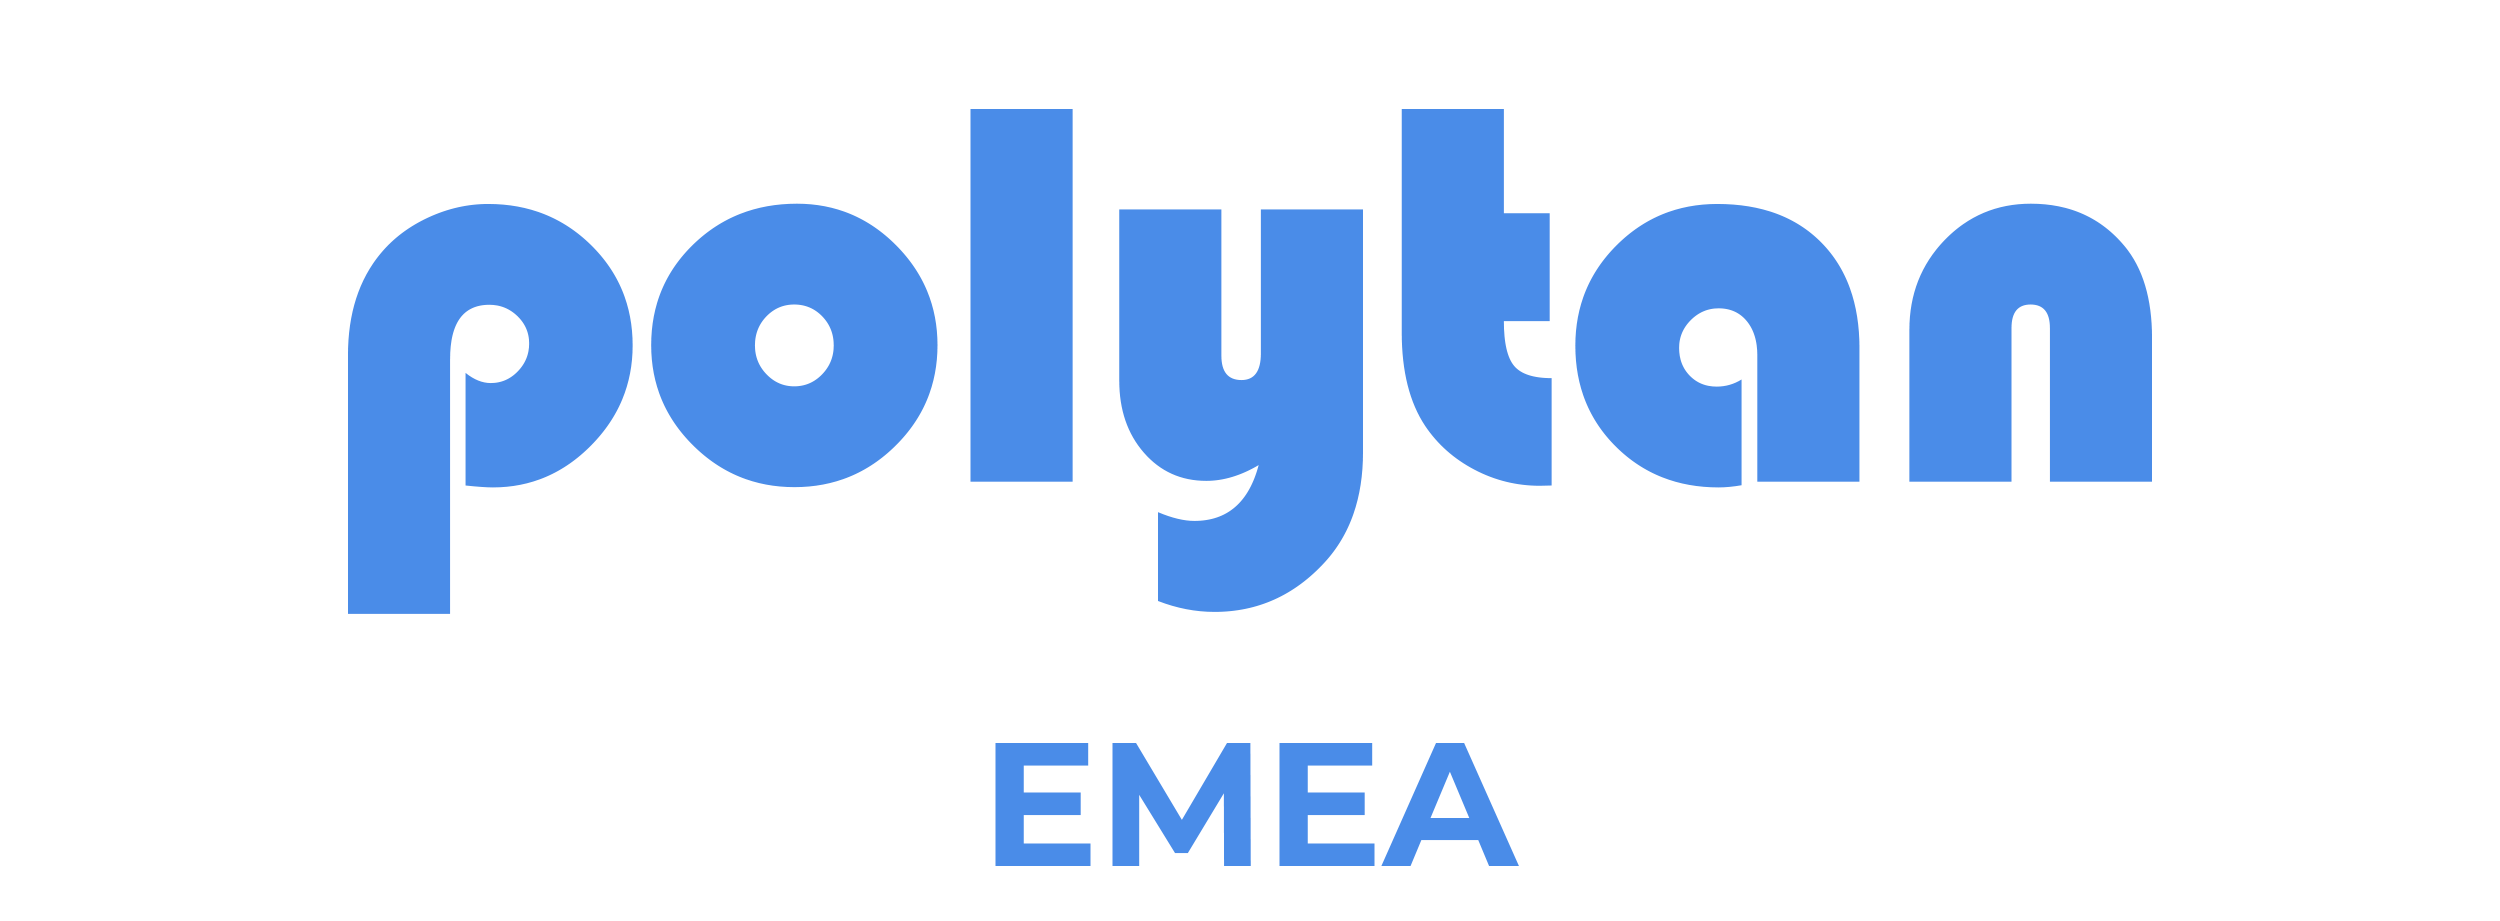 SG website-logos-dark blue-slim-Polytan EMEA.png